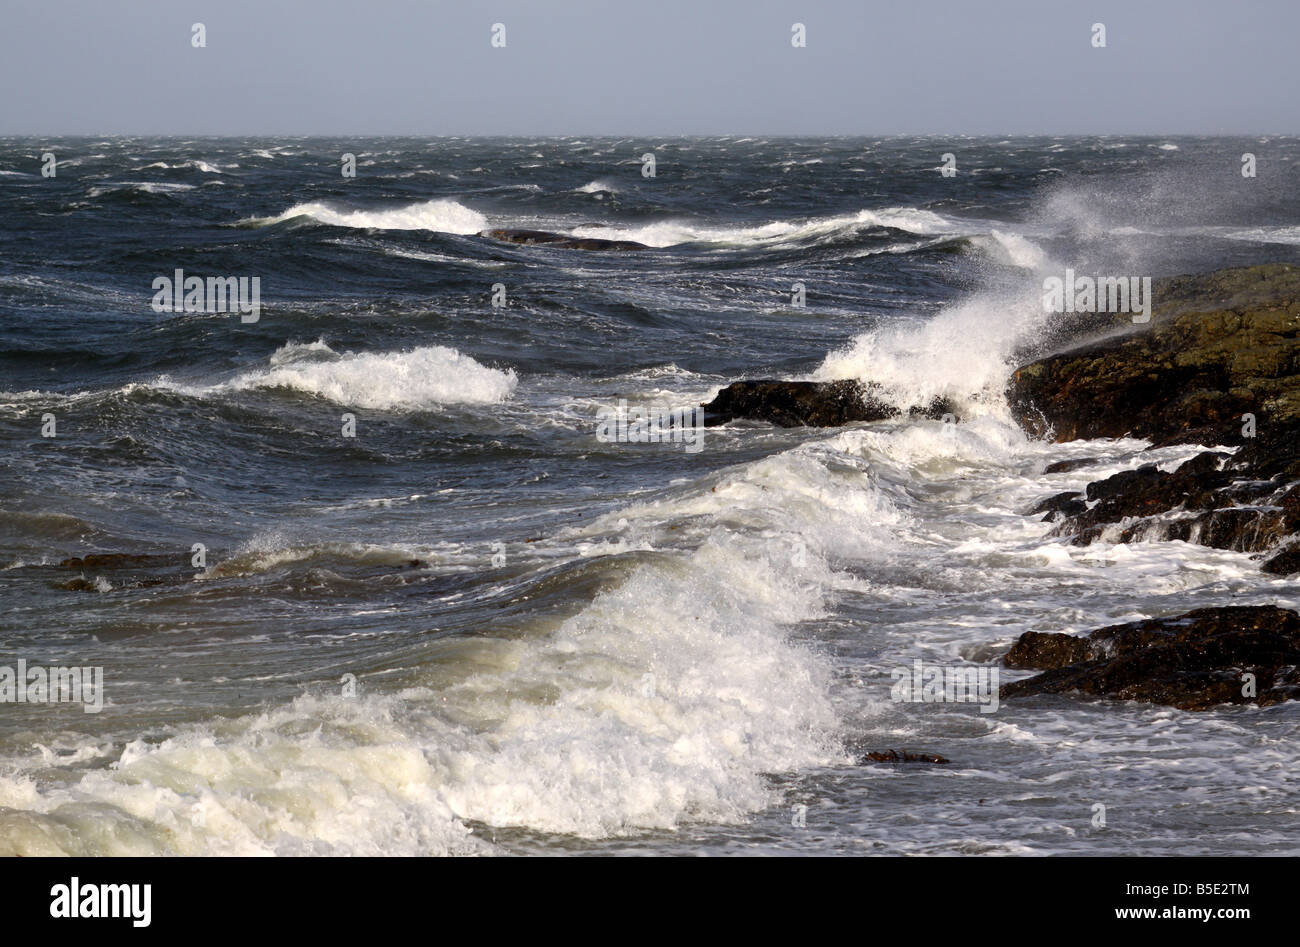 Waves breaking on rocks Stock Photo